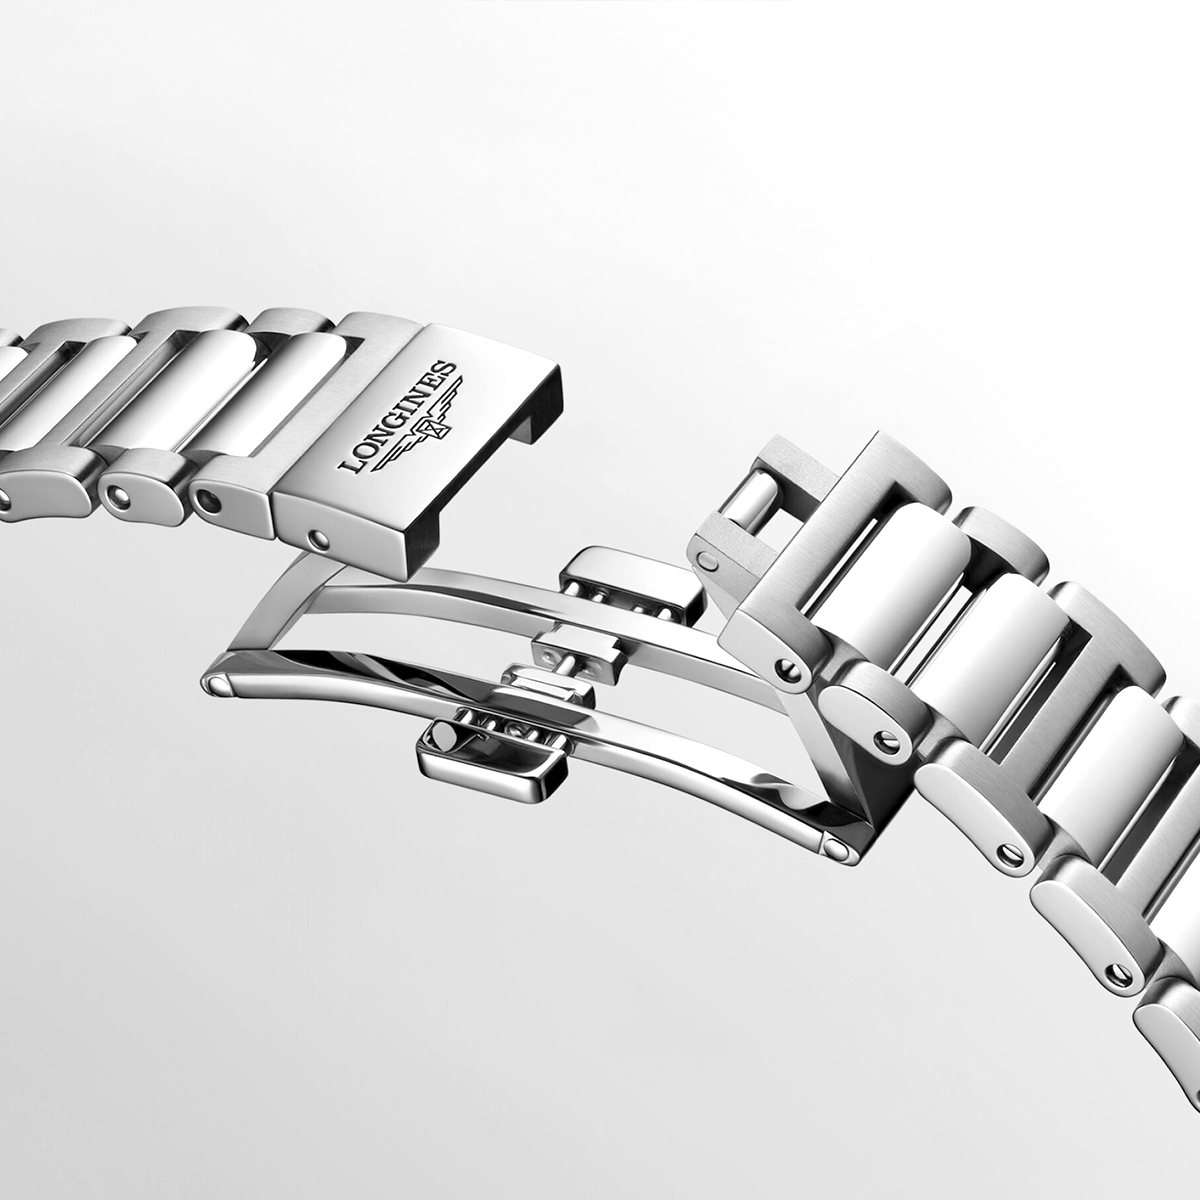 Conquest 34mm Silver Dial Automatic Bracelet Watch